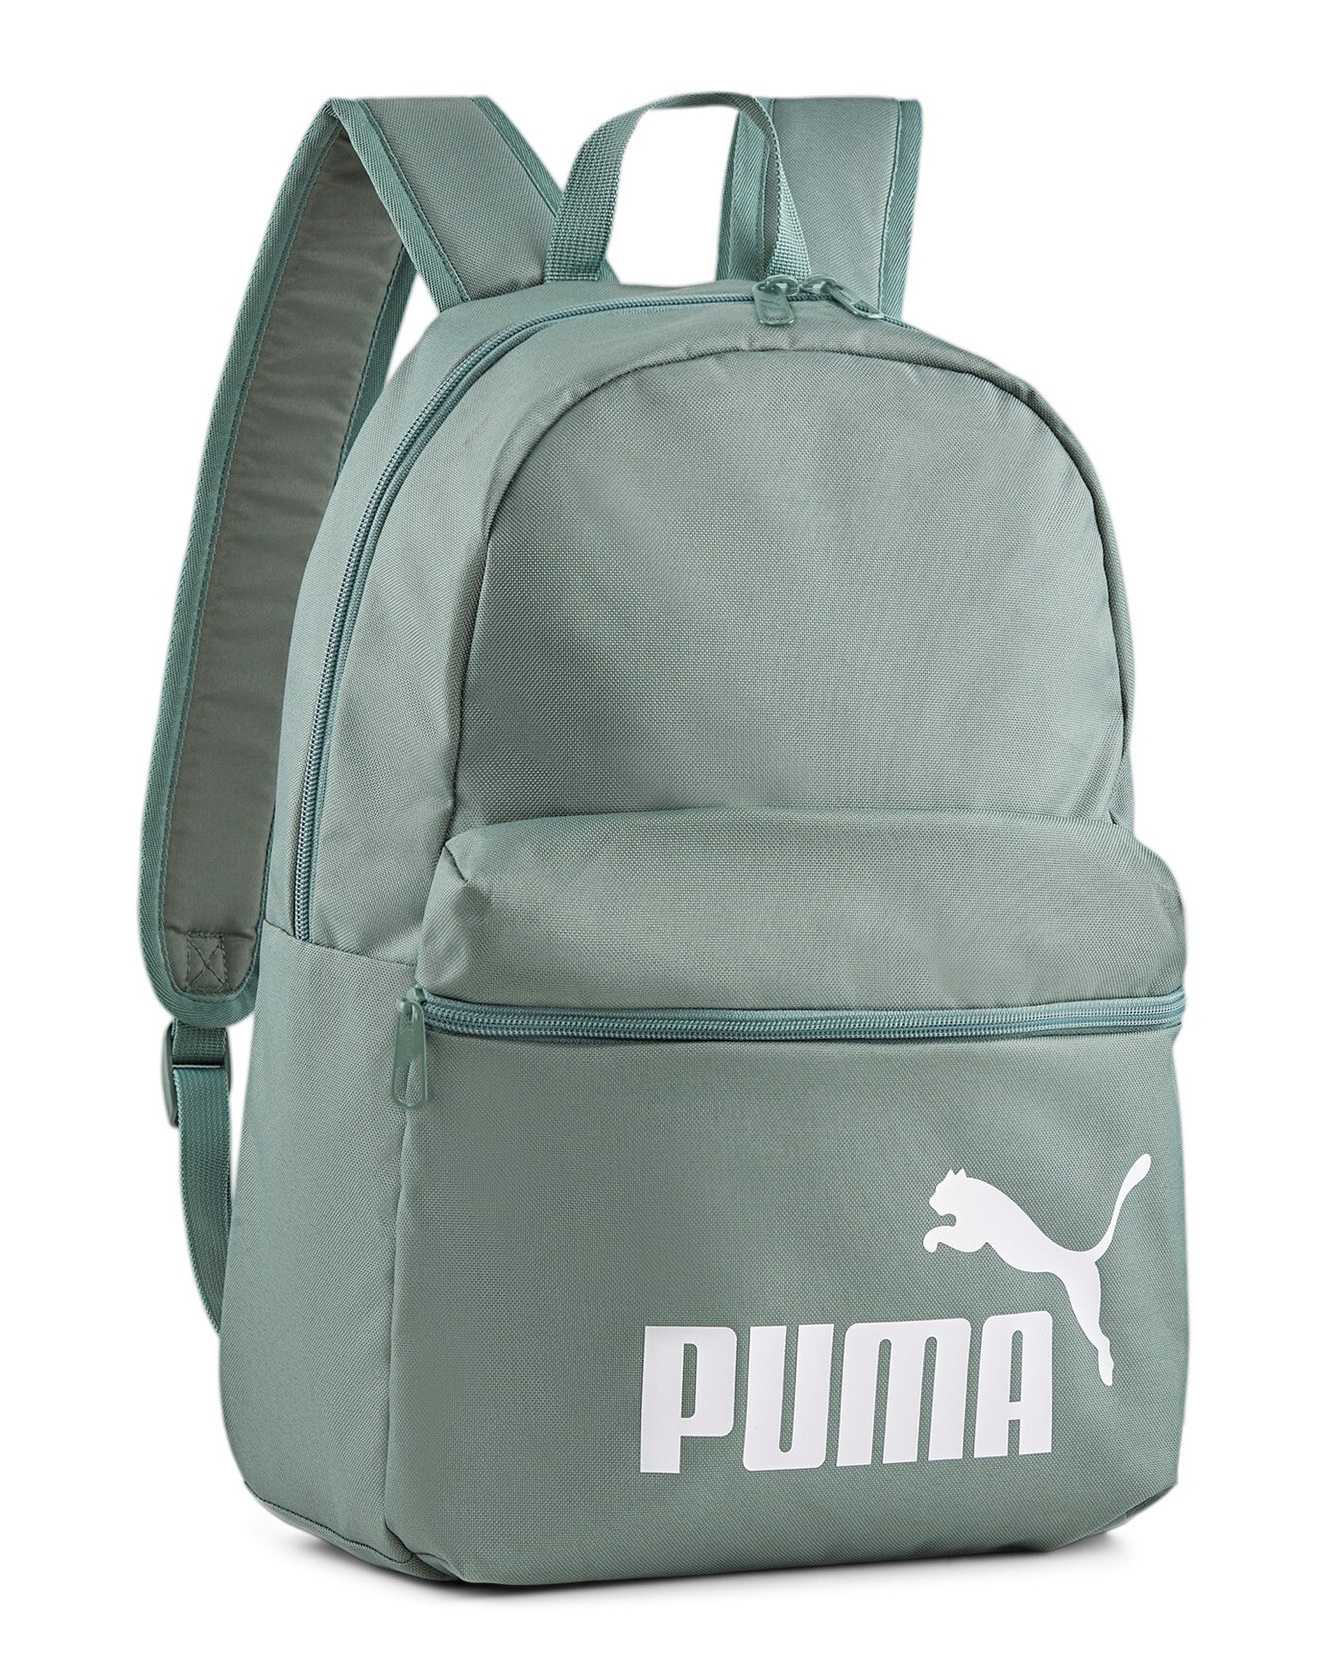 puma-phase-backpack-eucalyptus-1.jpg